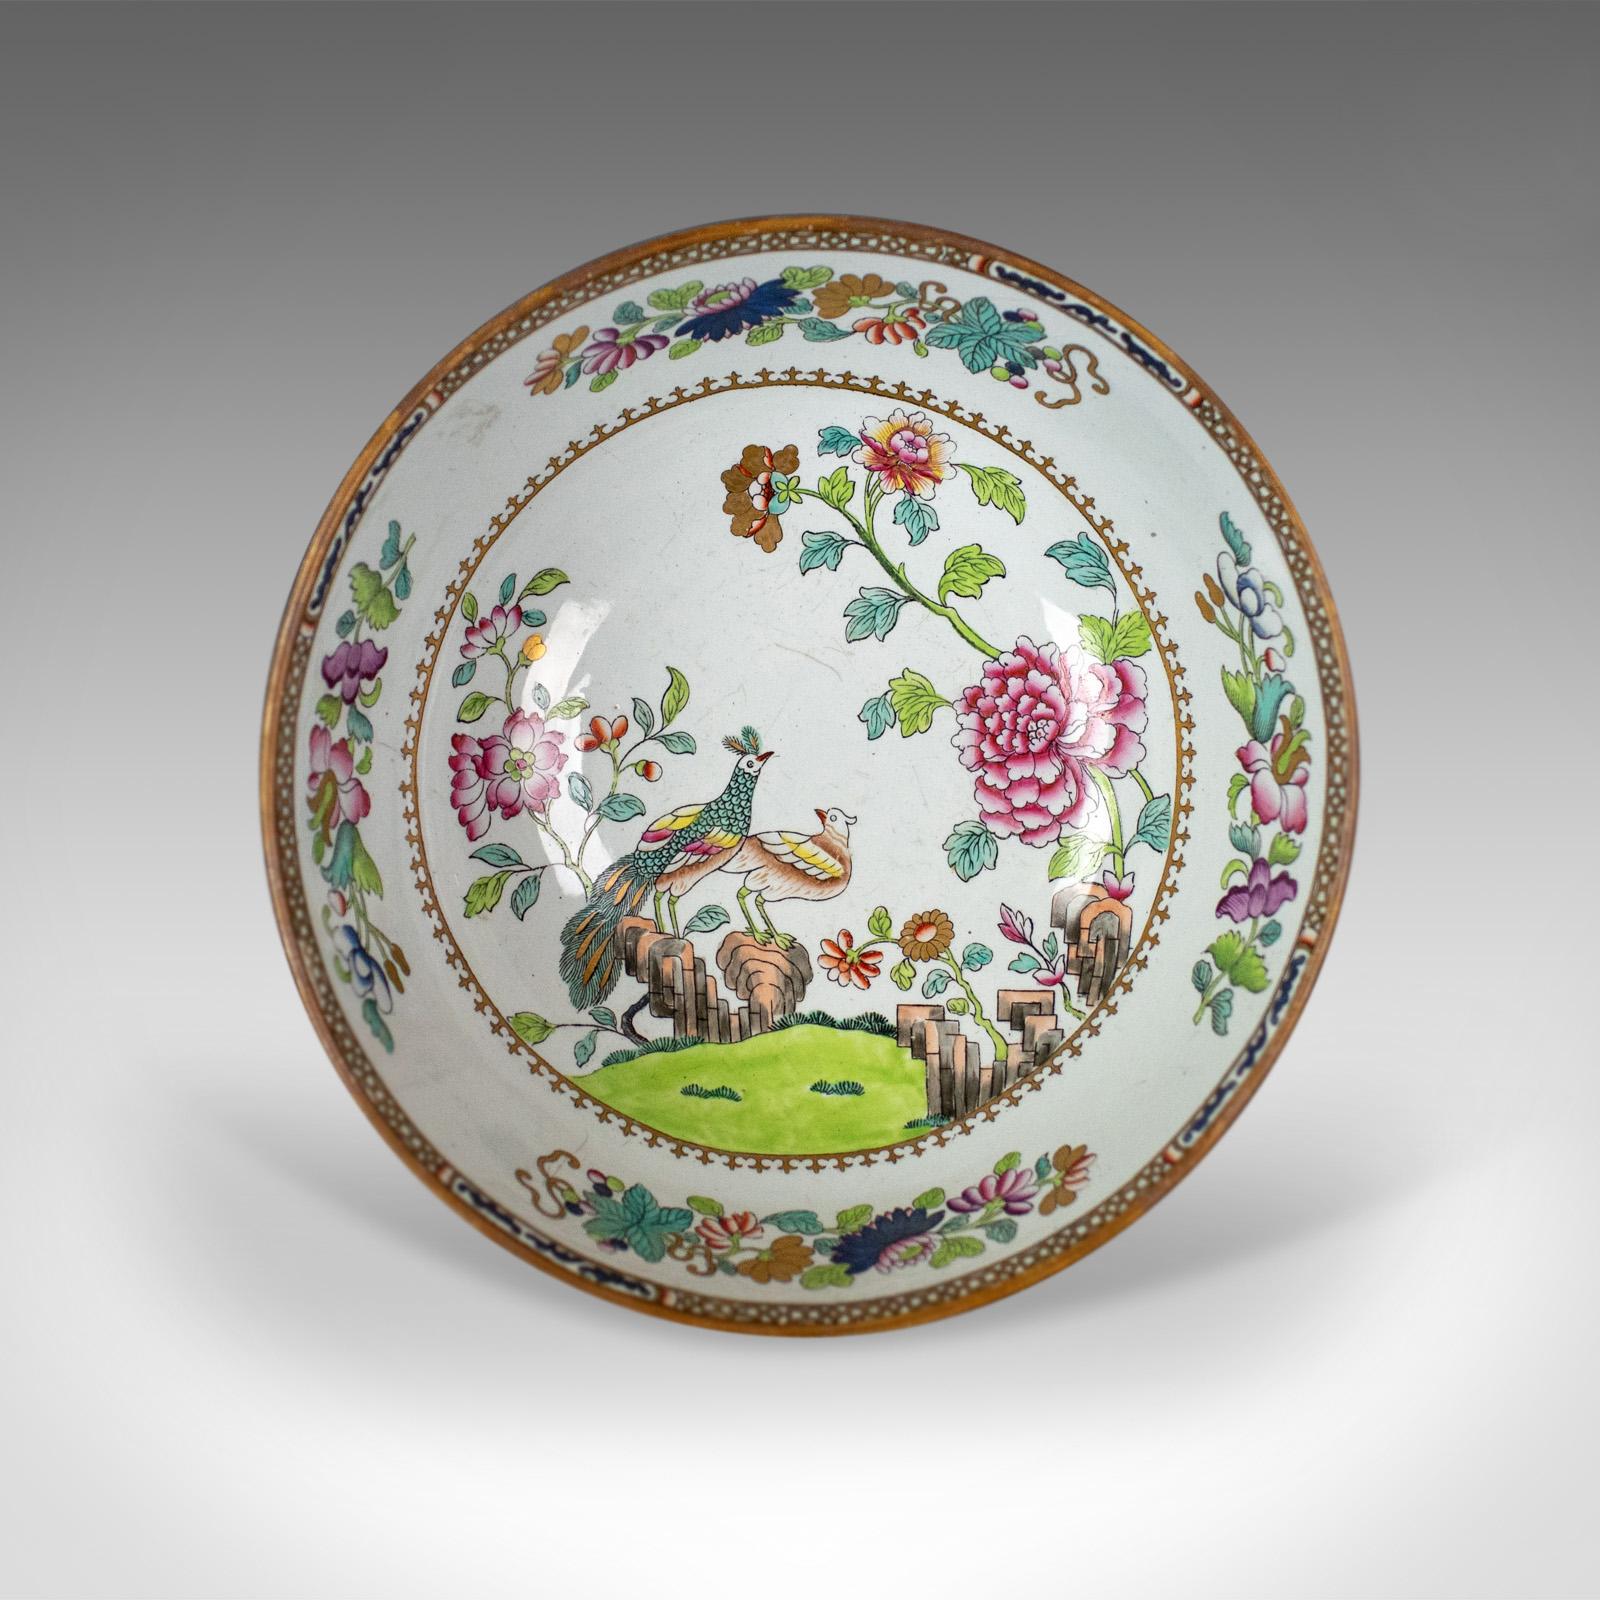 Chinese Export Antique Ironstone Bowl, 19th Century, Victorian, Chinoiserie Ceramic